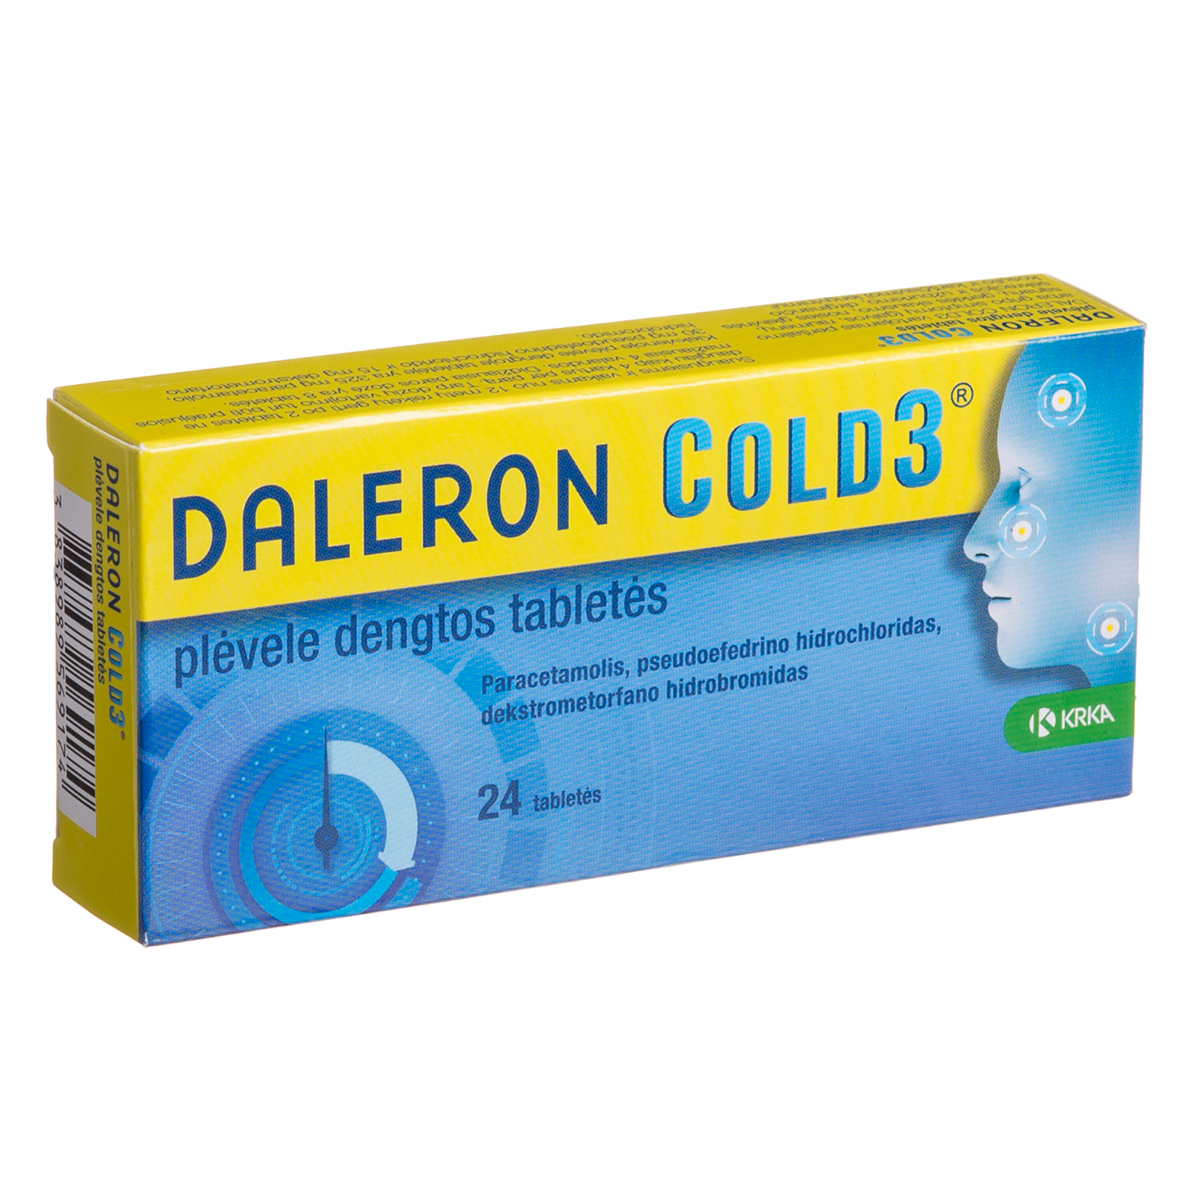 DALERON COLD3, plėvele dengtos tabletės, N24